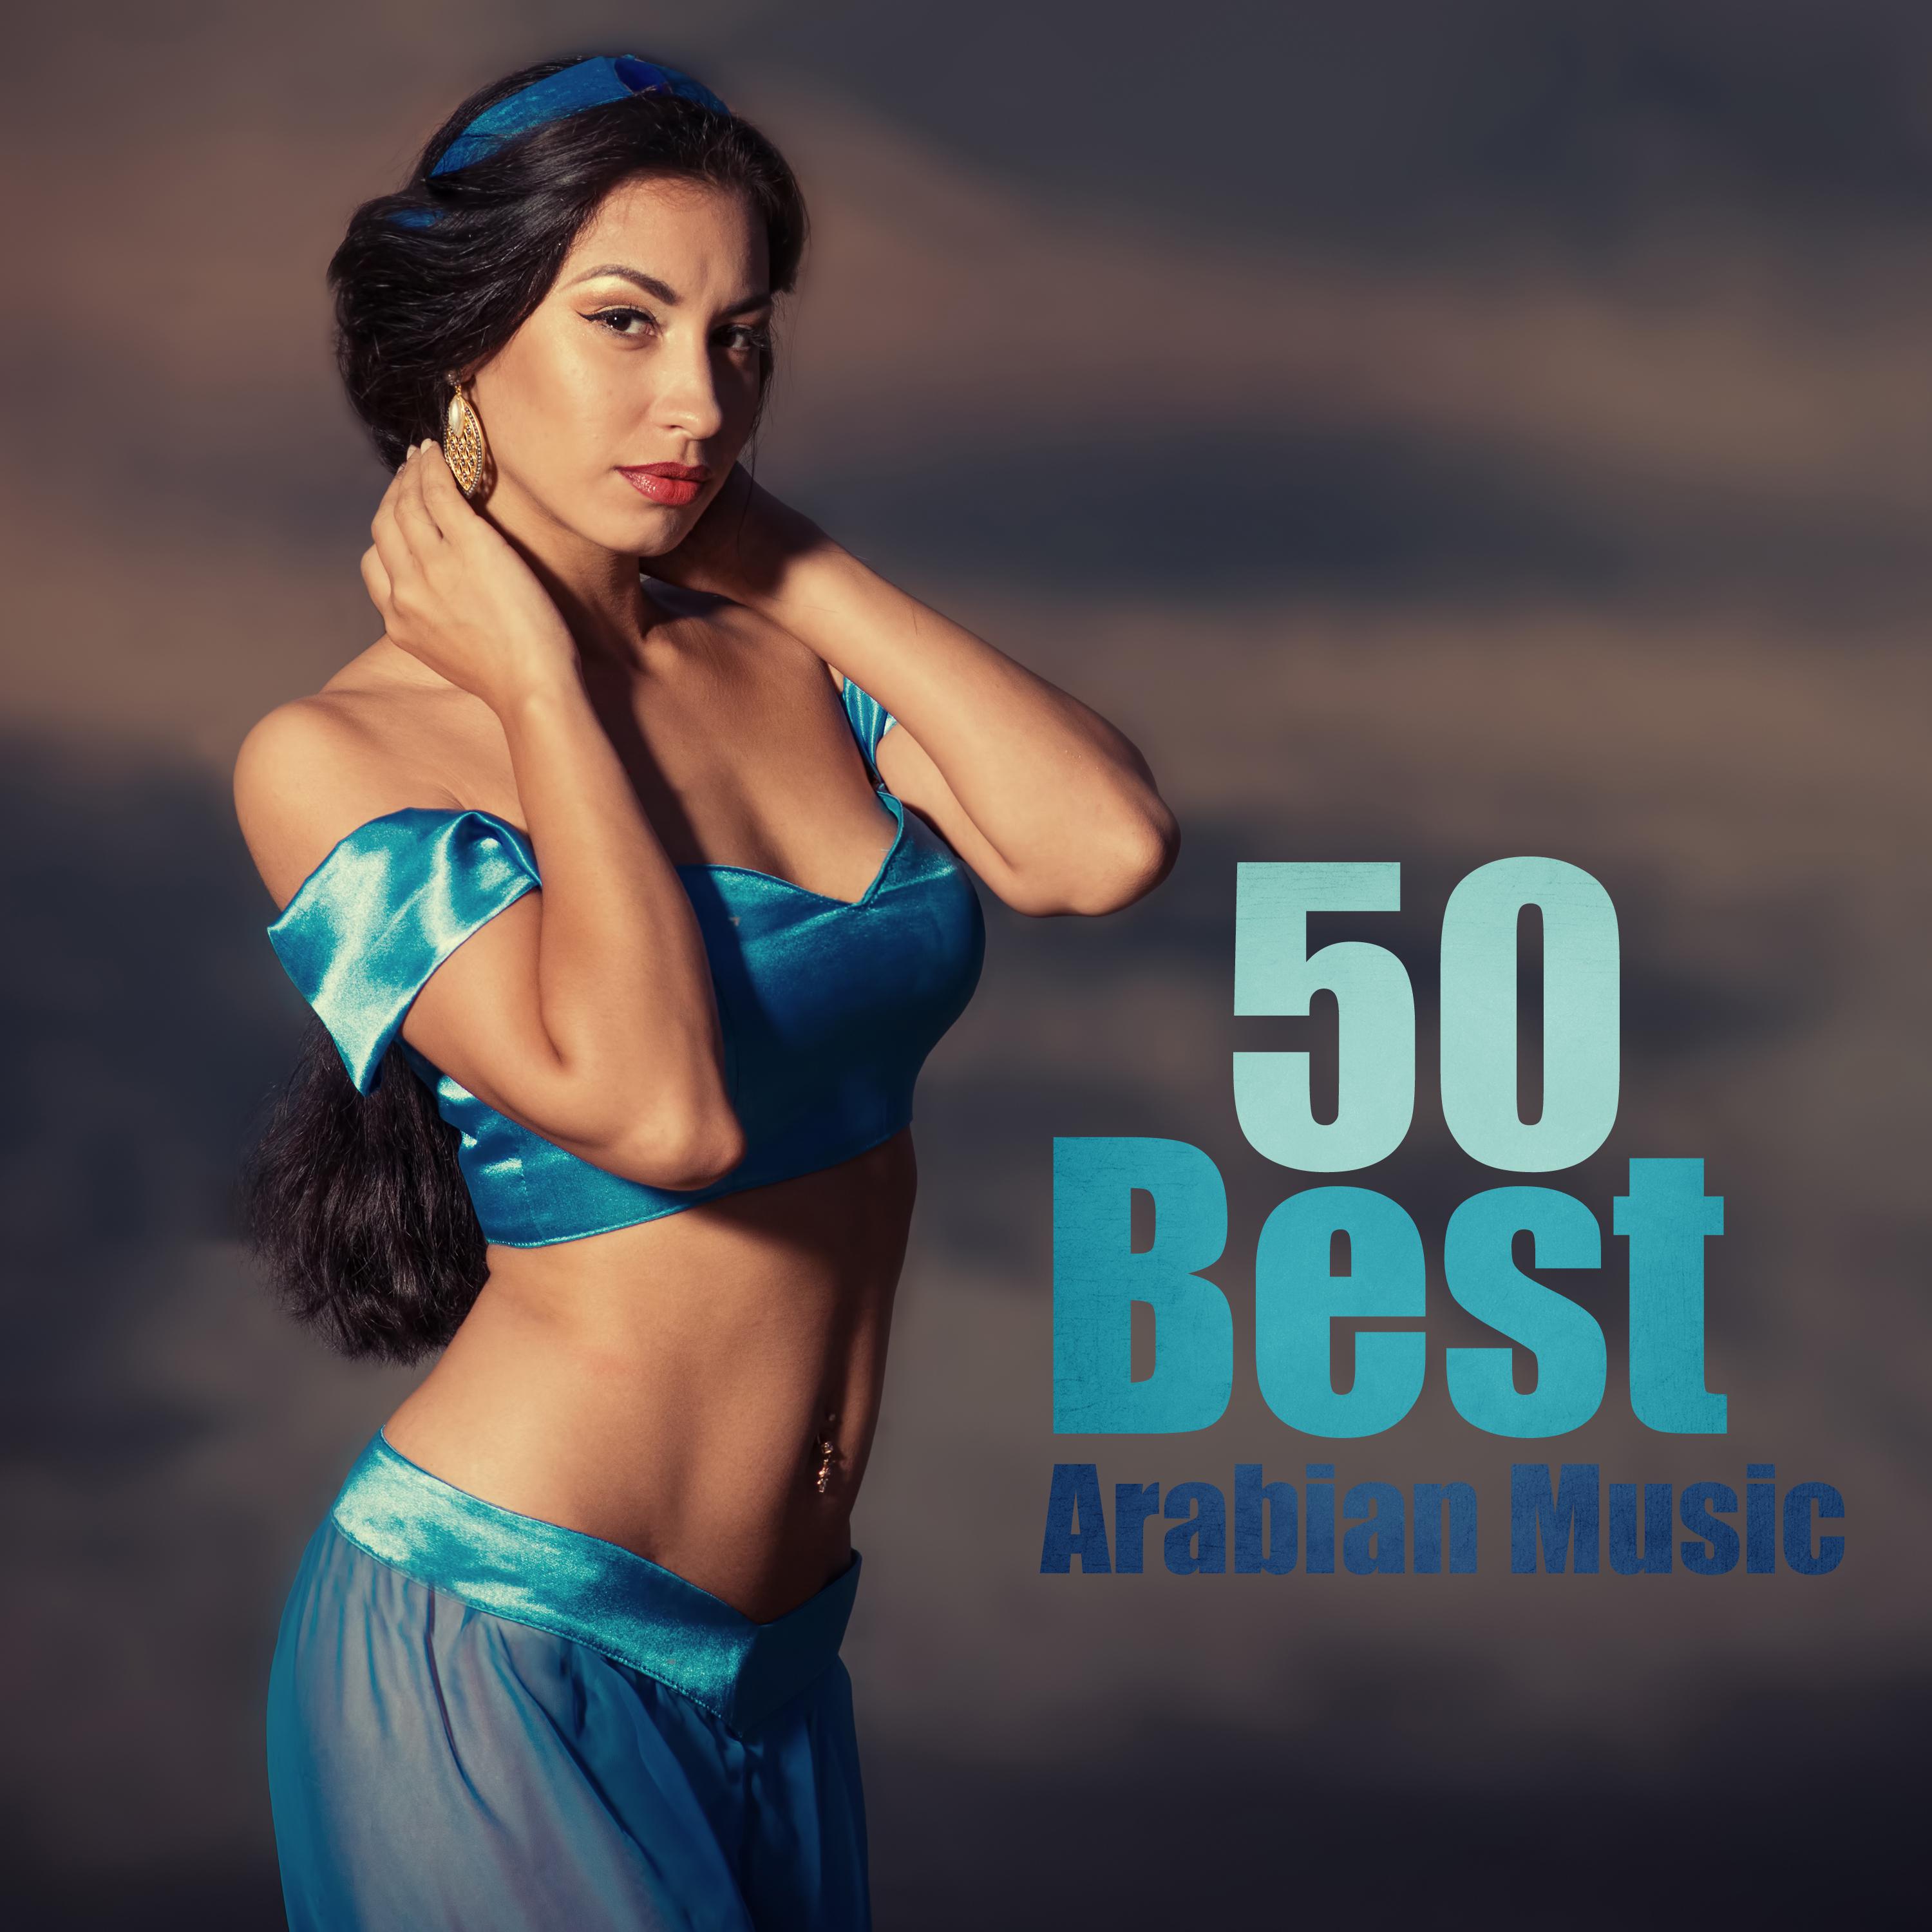 50 Best Arabian Music (Arabic Lounge Music, Belly Dance, Oriental Melodies)